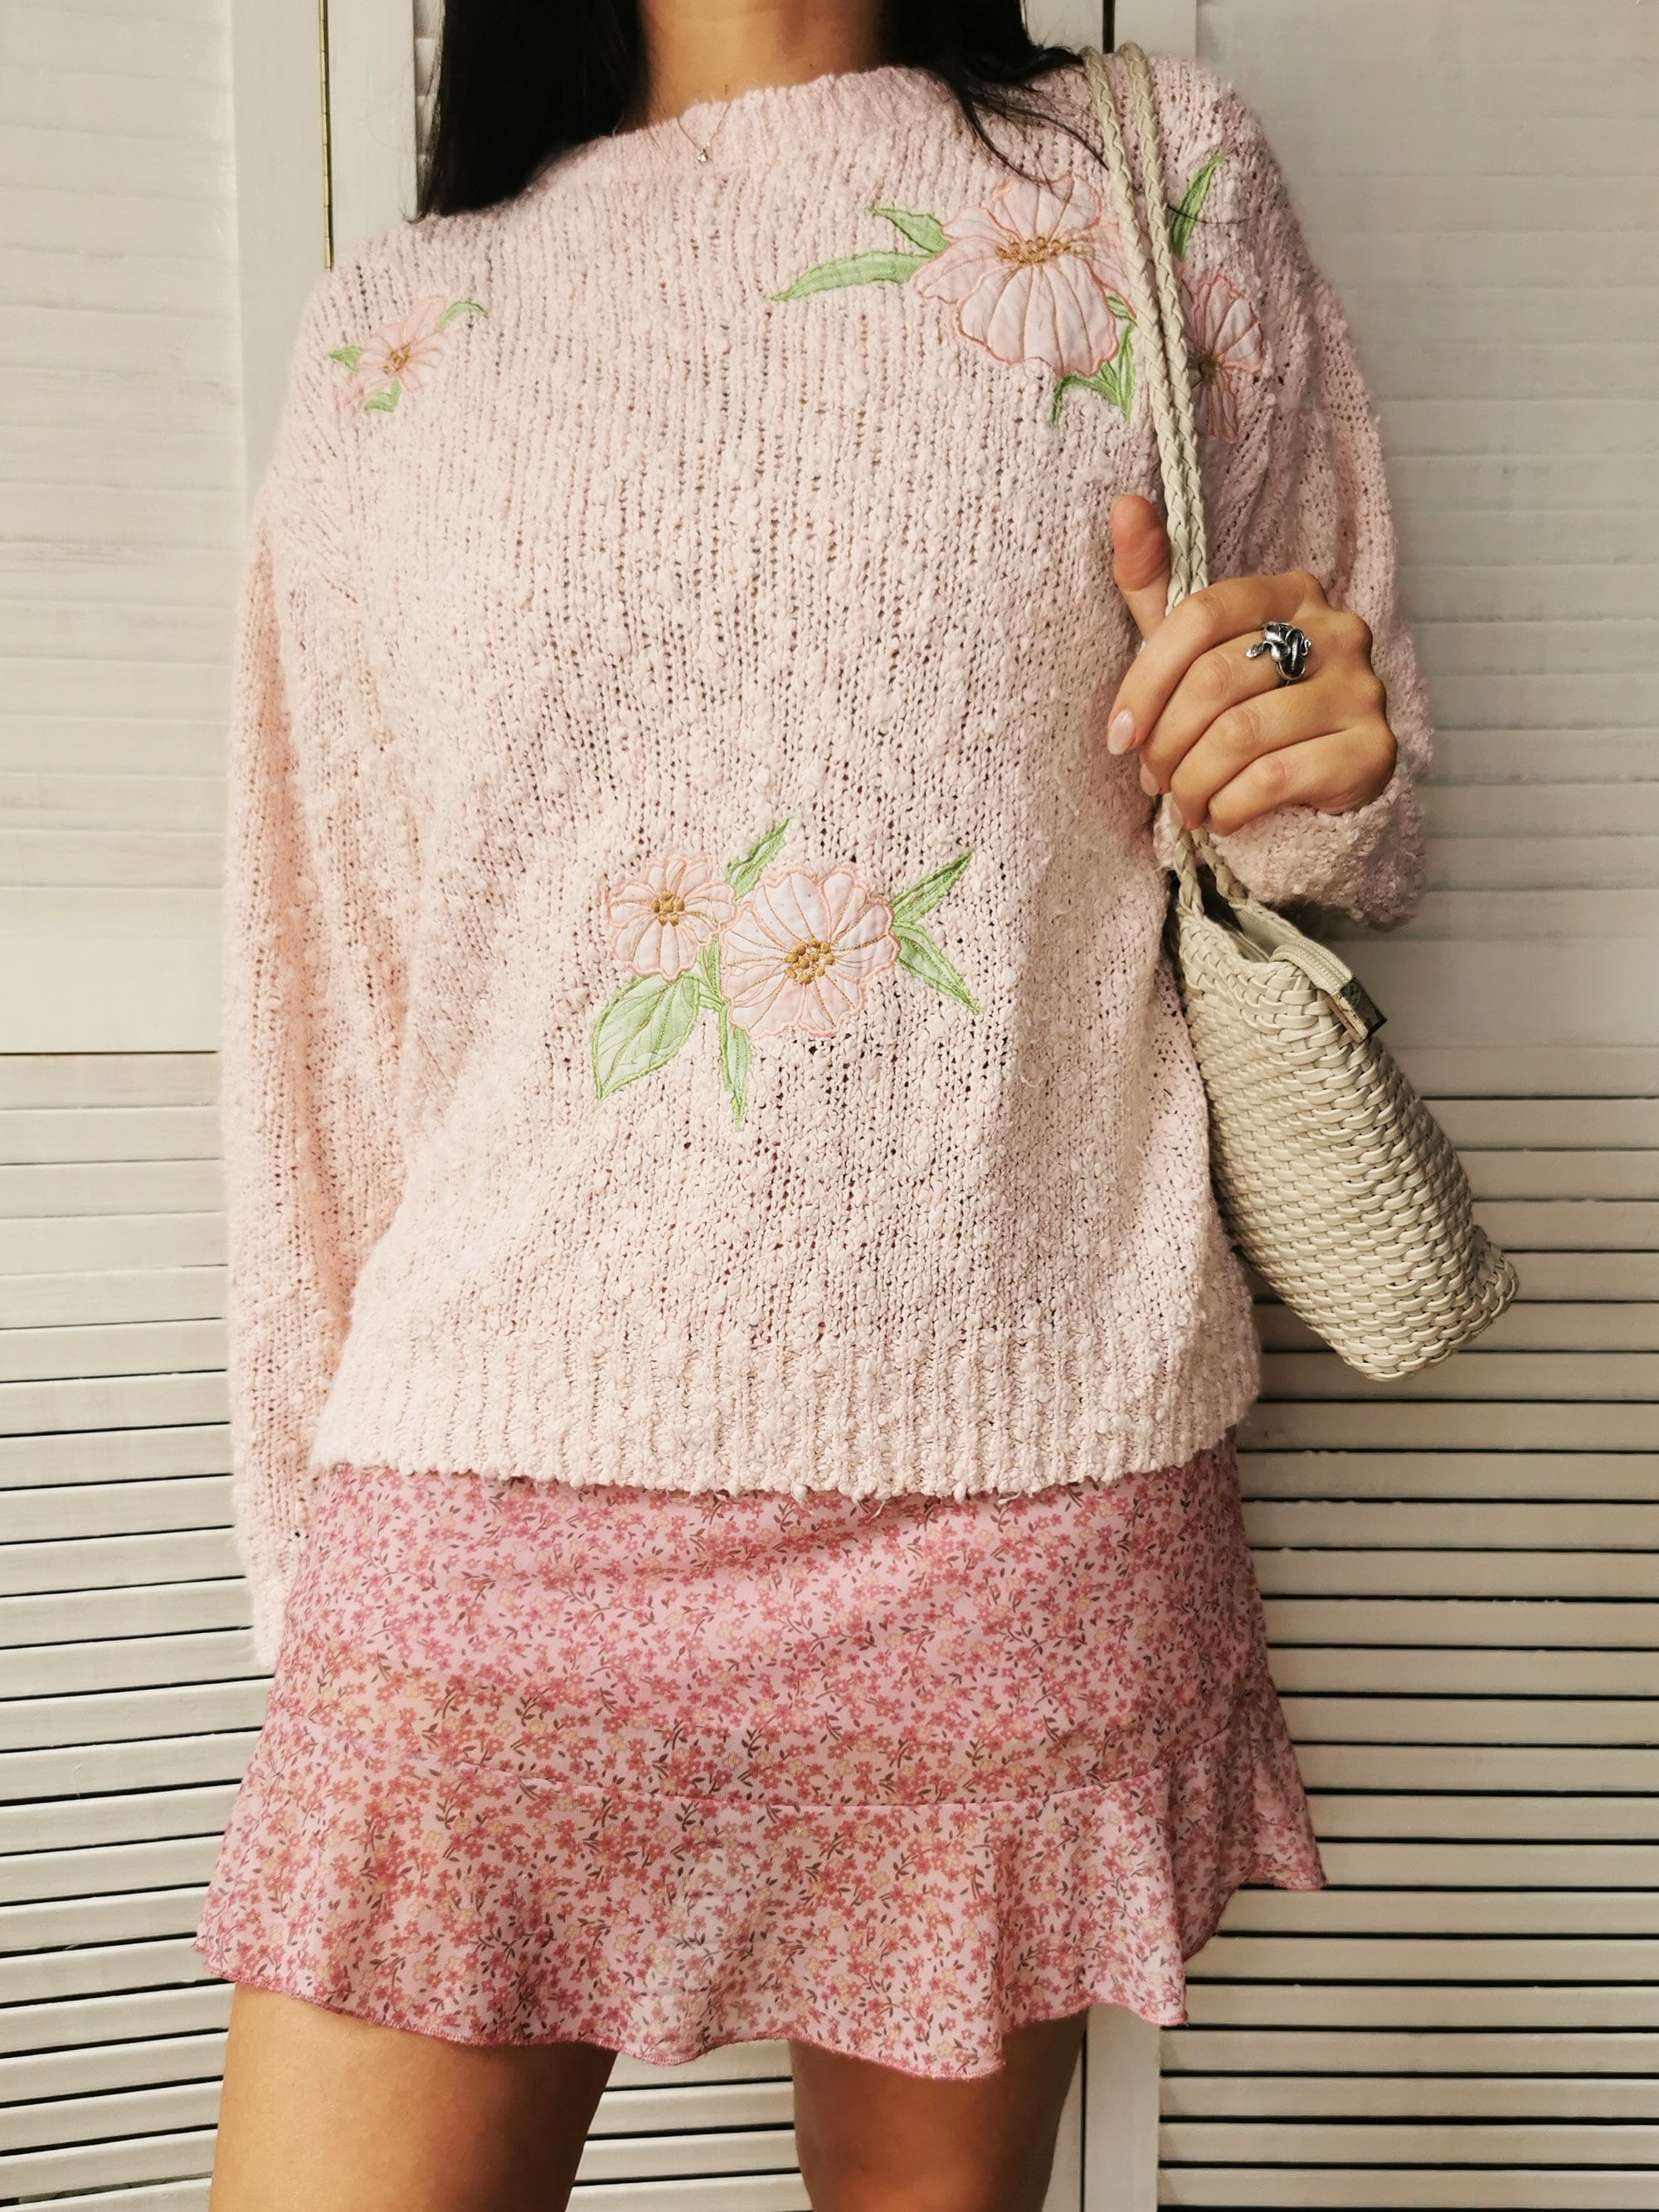 Vintage 80s pastel pink oversize Moms sweater